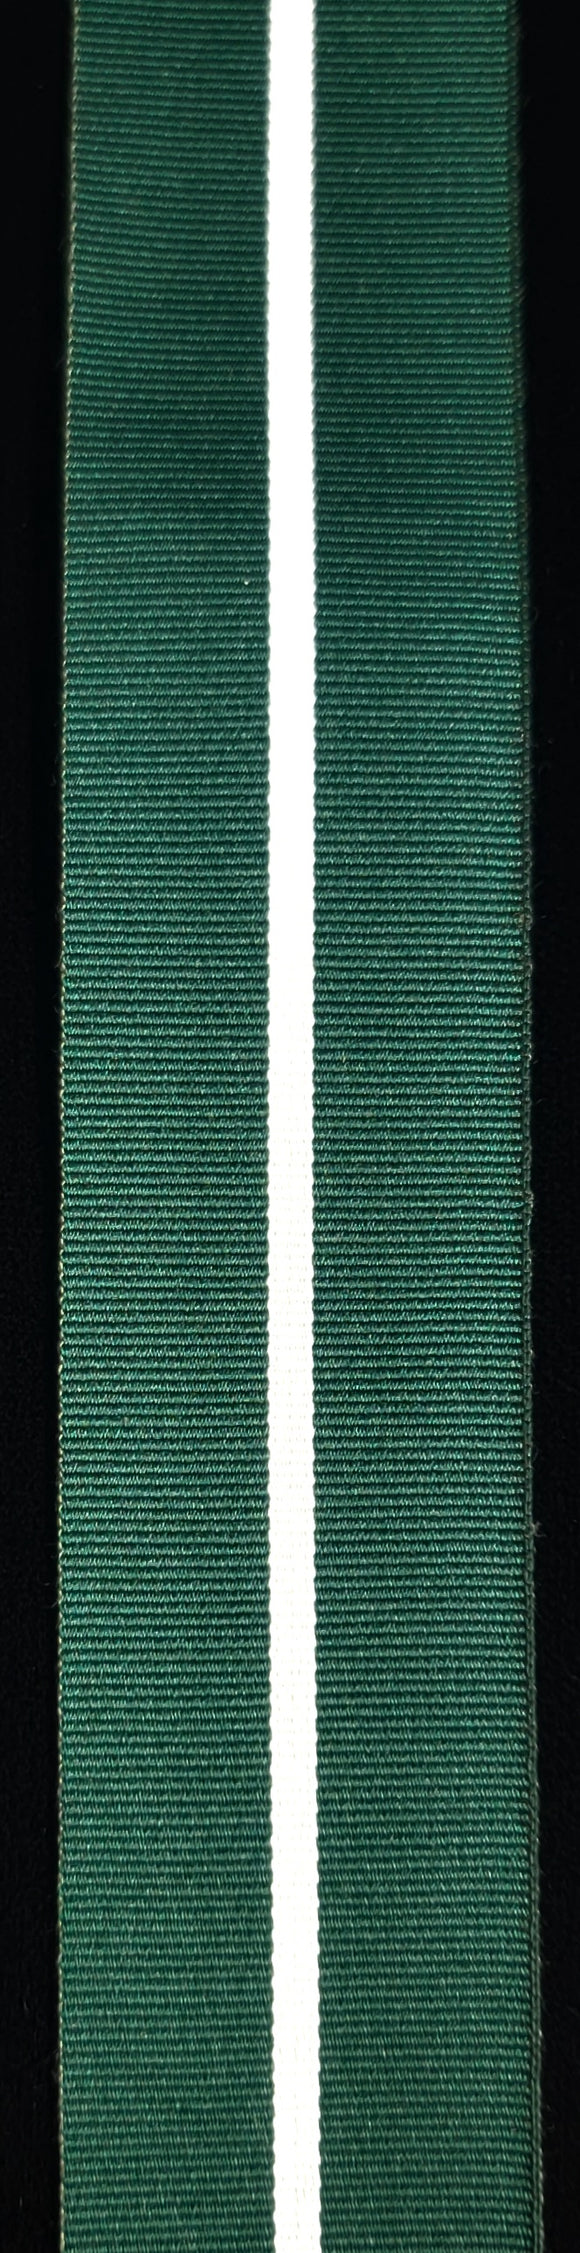 Ribbon, Pakistan Independence Medal